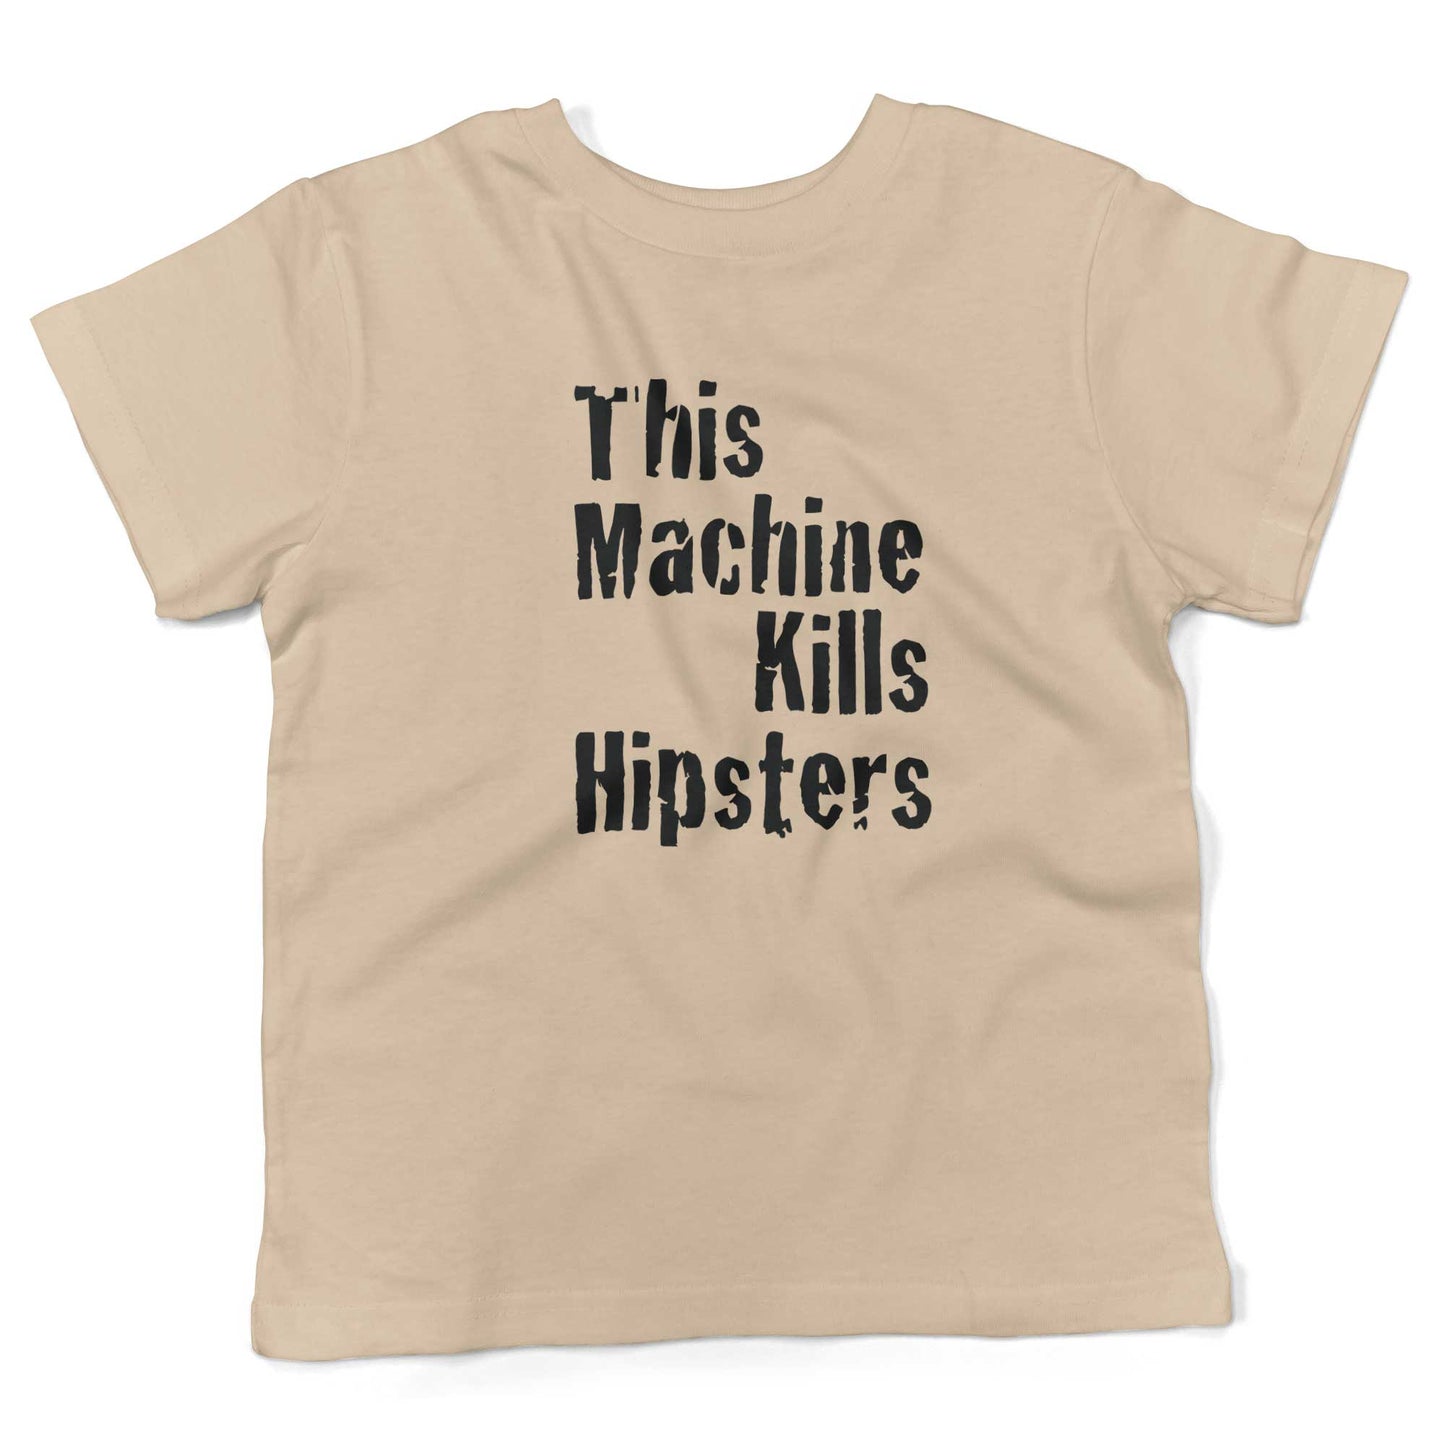 This Machine Kills Hipsters Toddler Shirt-Organic Natural-2T